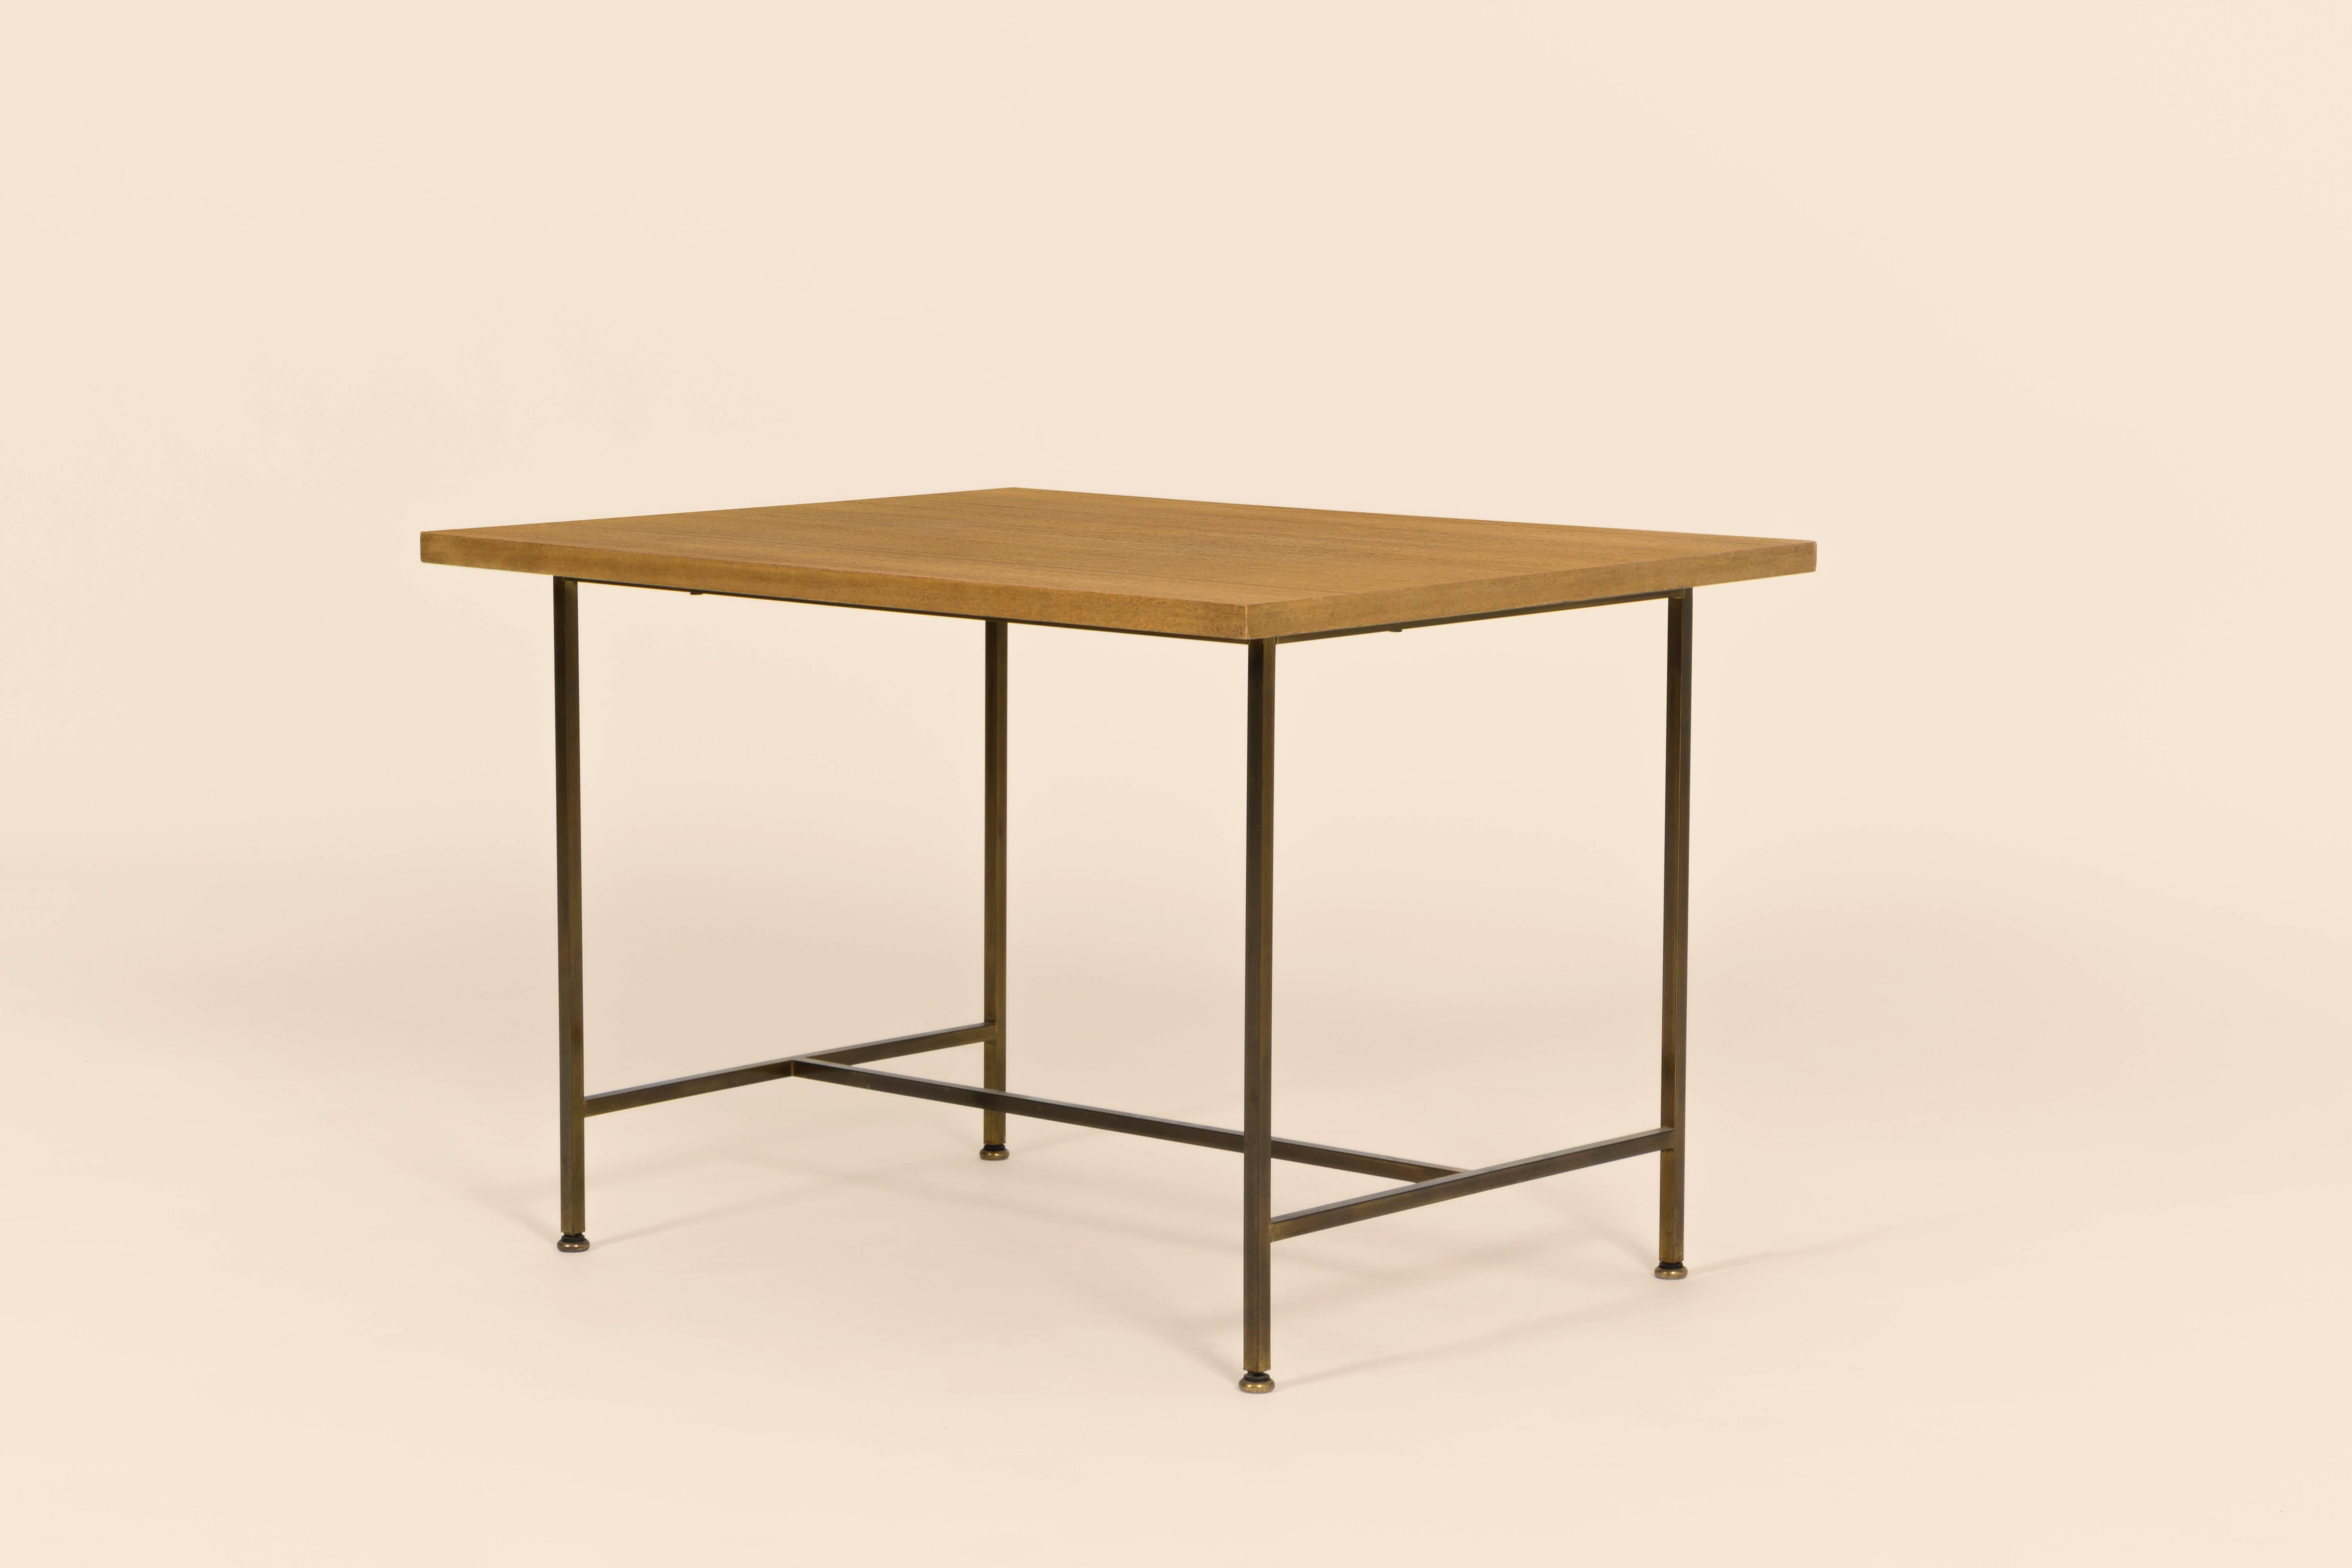 Paul McCobb side table. Mahogany surface, brass frame.